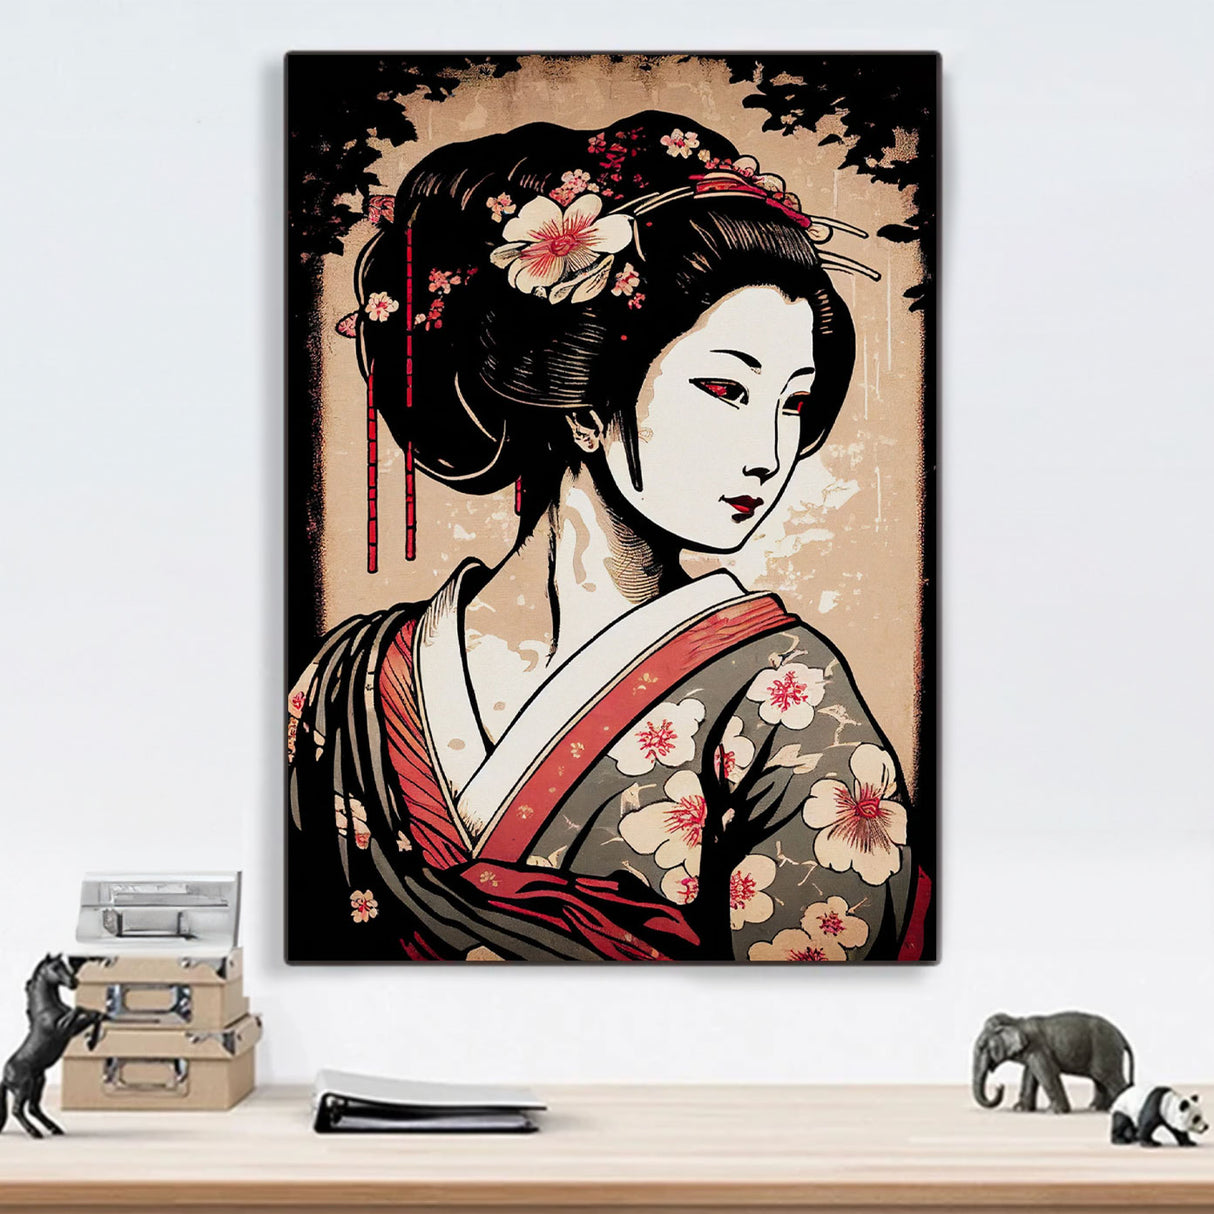 Tableau japonais ancien geisha